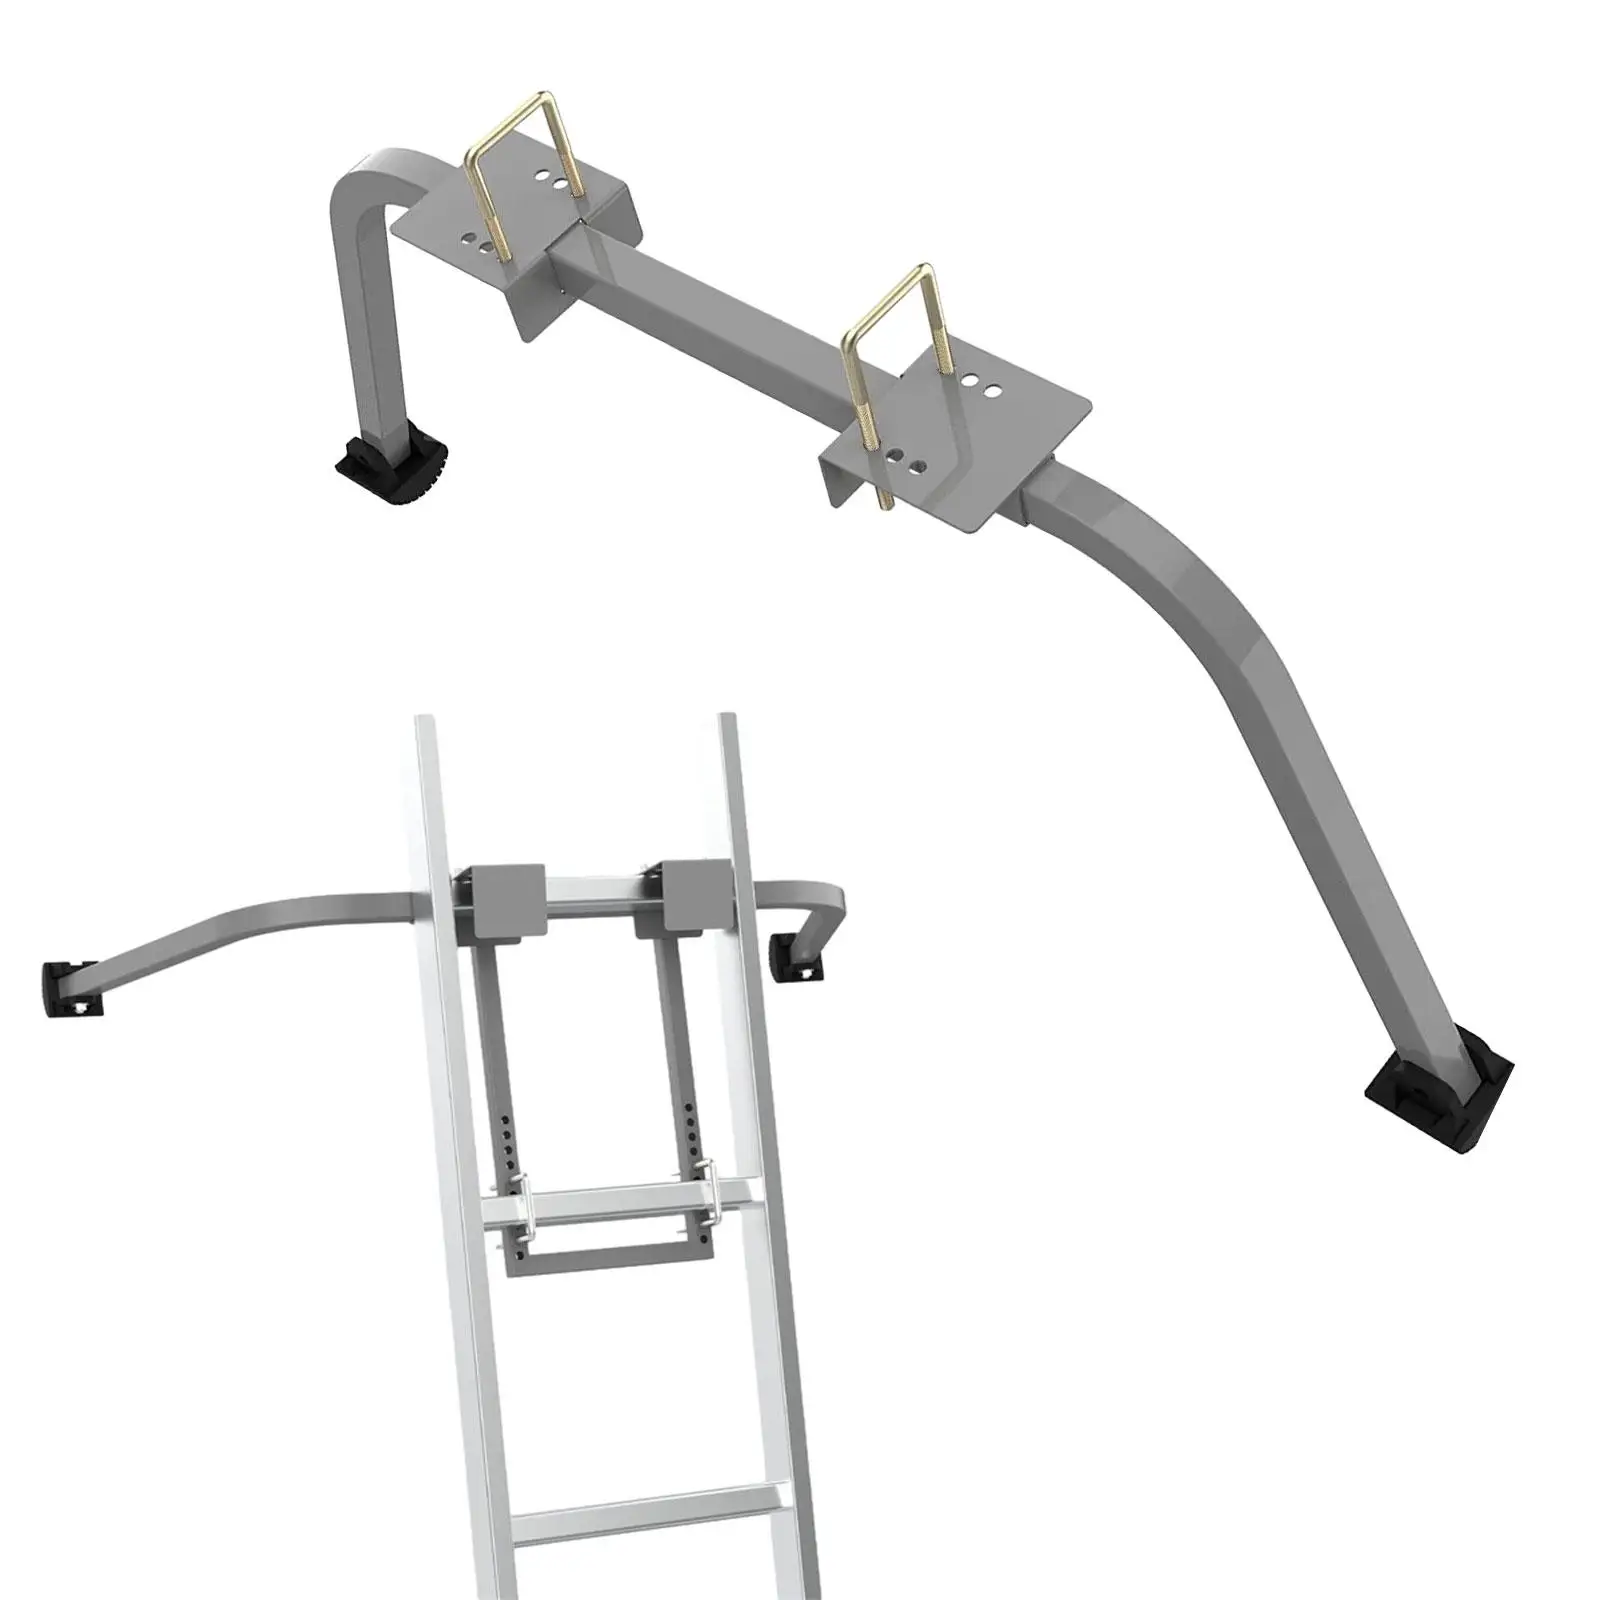 Ladder Stabilizer Straight Ladder Stabilizer Ladder Spare Parts Roof Ladder Standoff Wall Ladder Standoff for Home, Outdoor